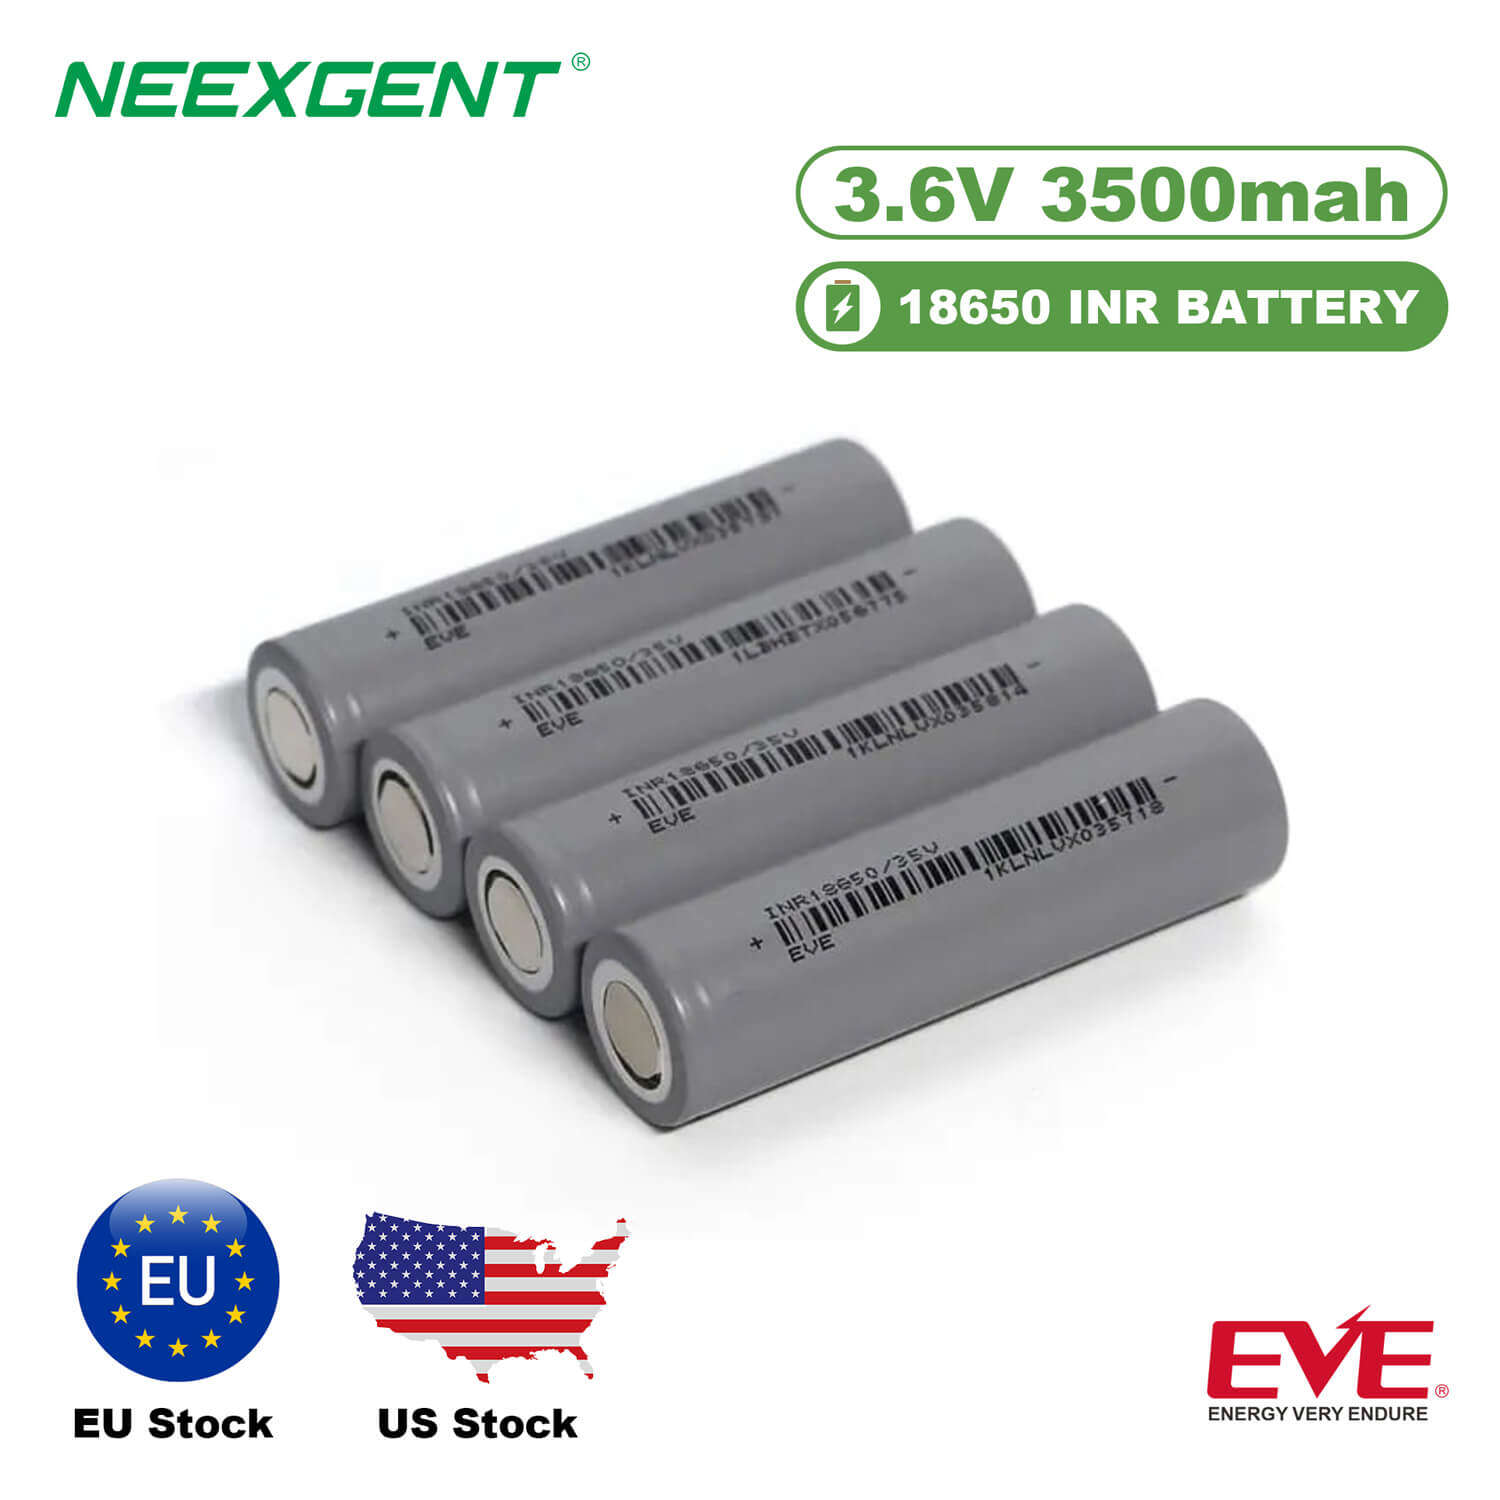 Neexgent EVE 18650 35V 3500mah 3.65V INR Battery